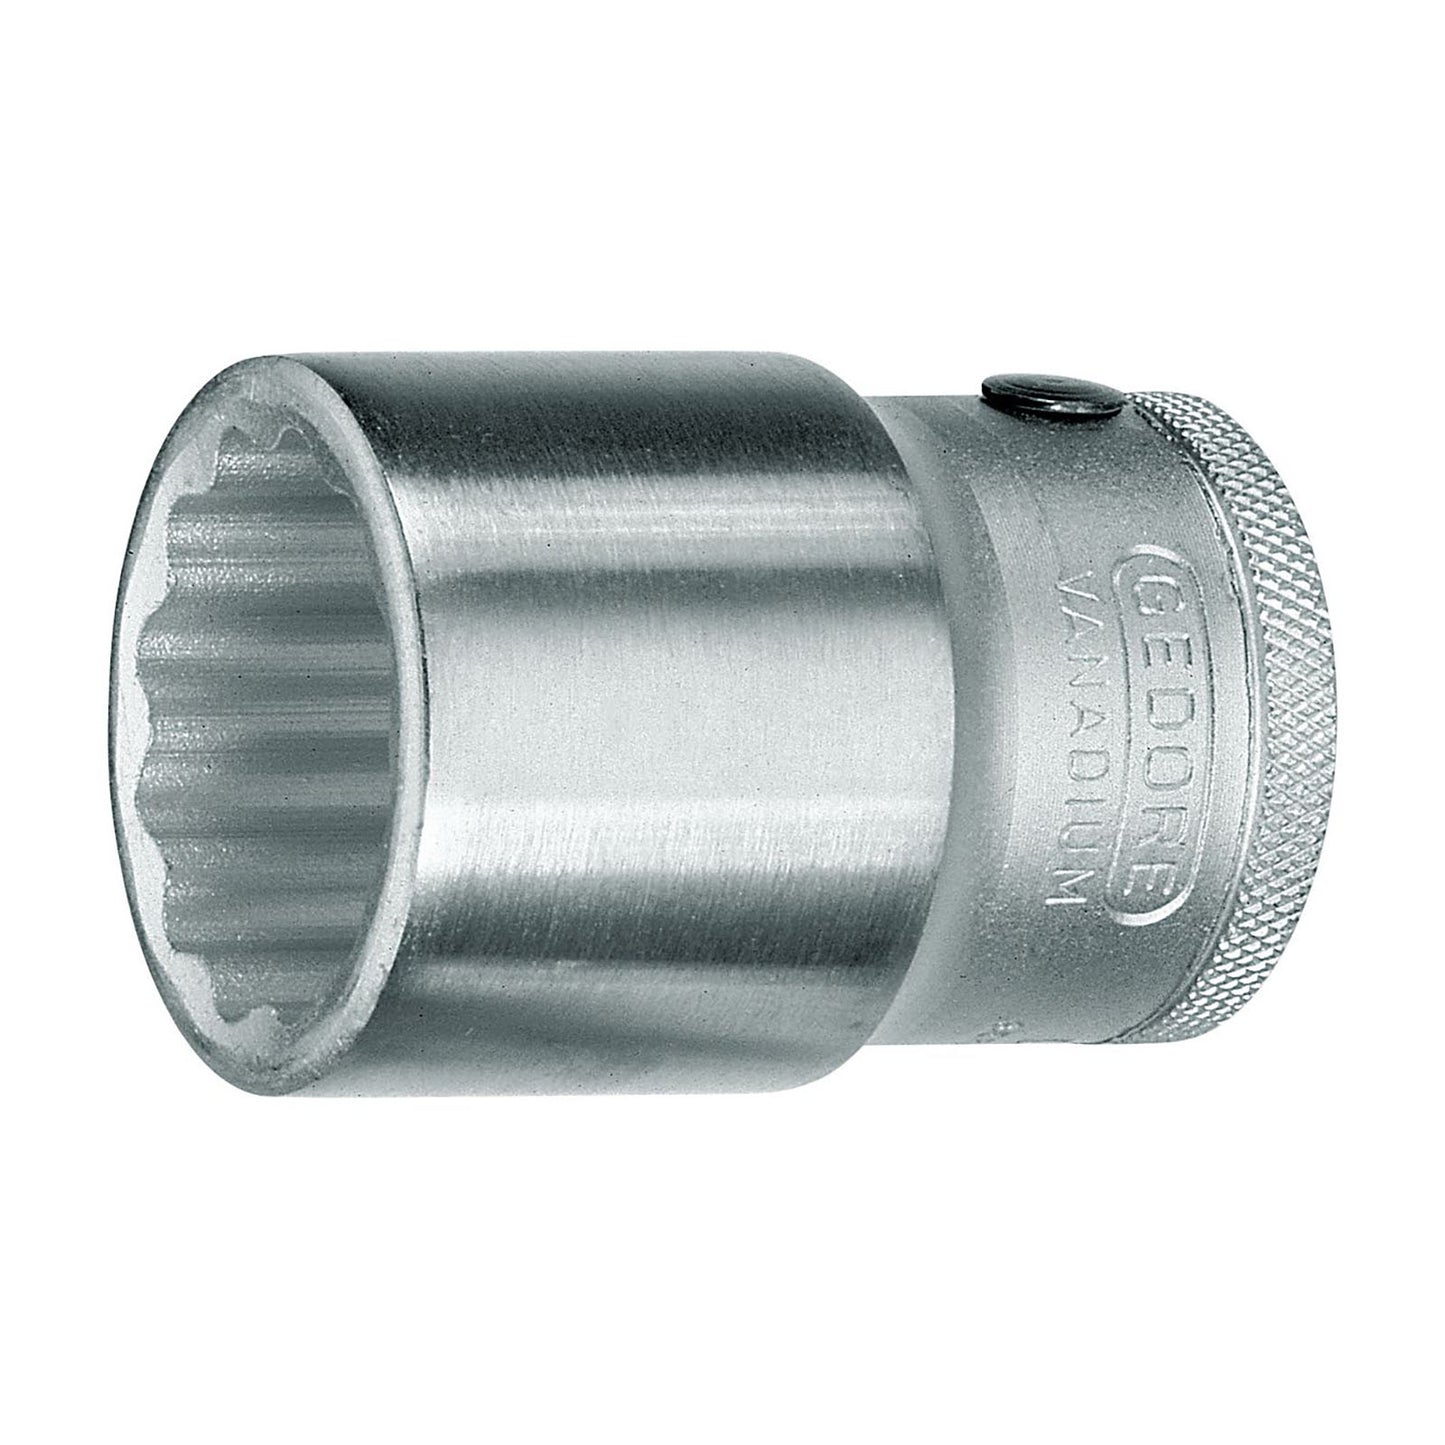 GEDORE D 32 22 - Unit Drive Socket 3/4", 22 mm (6272240)